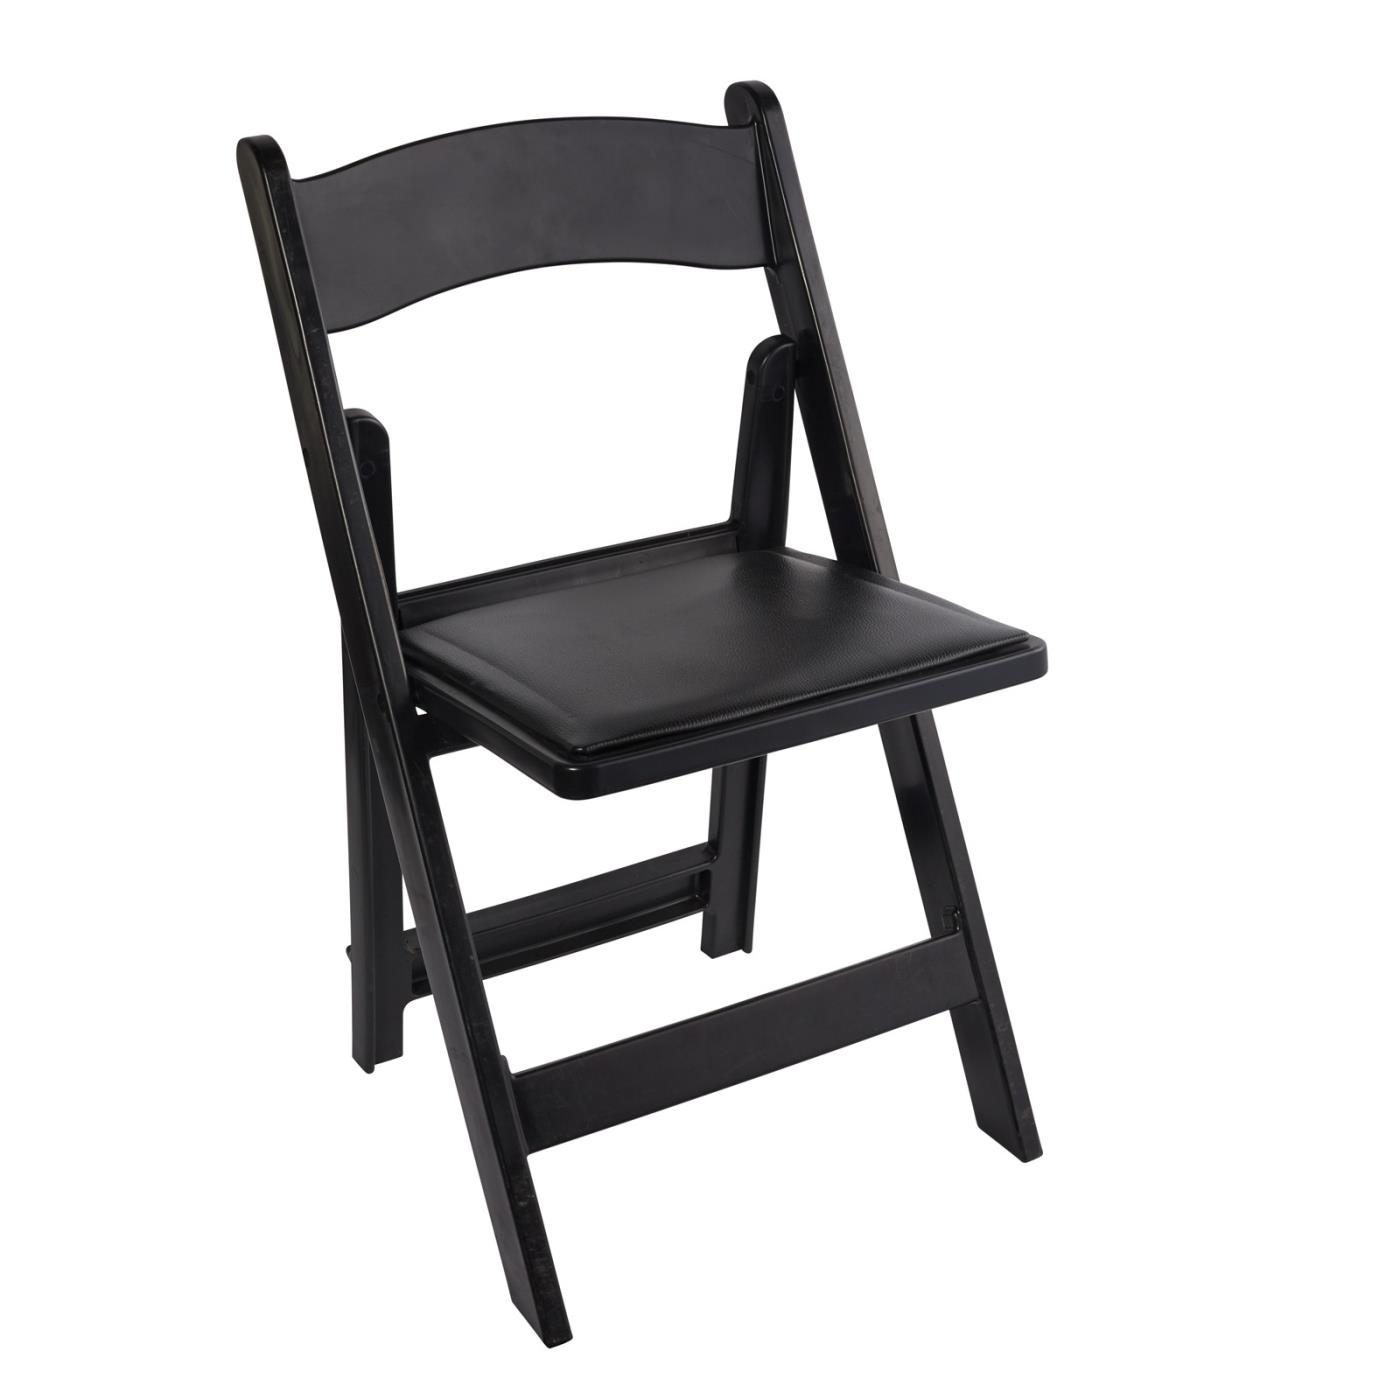 Resin Folding Chair - Black